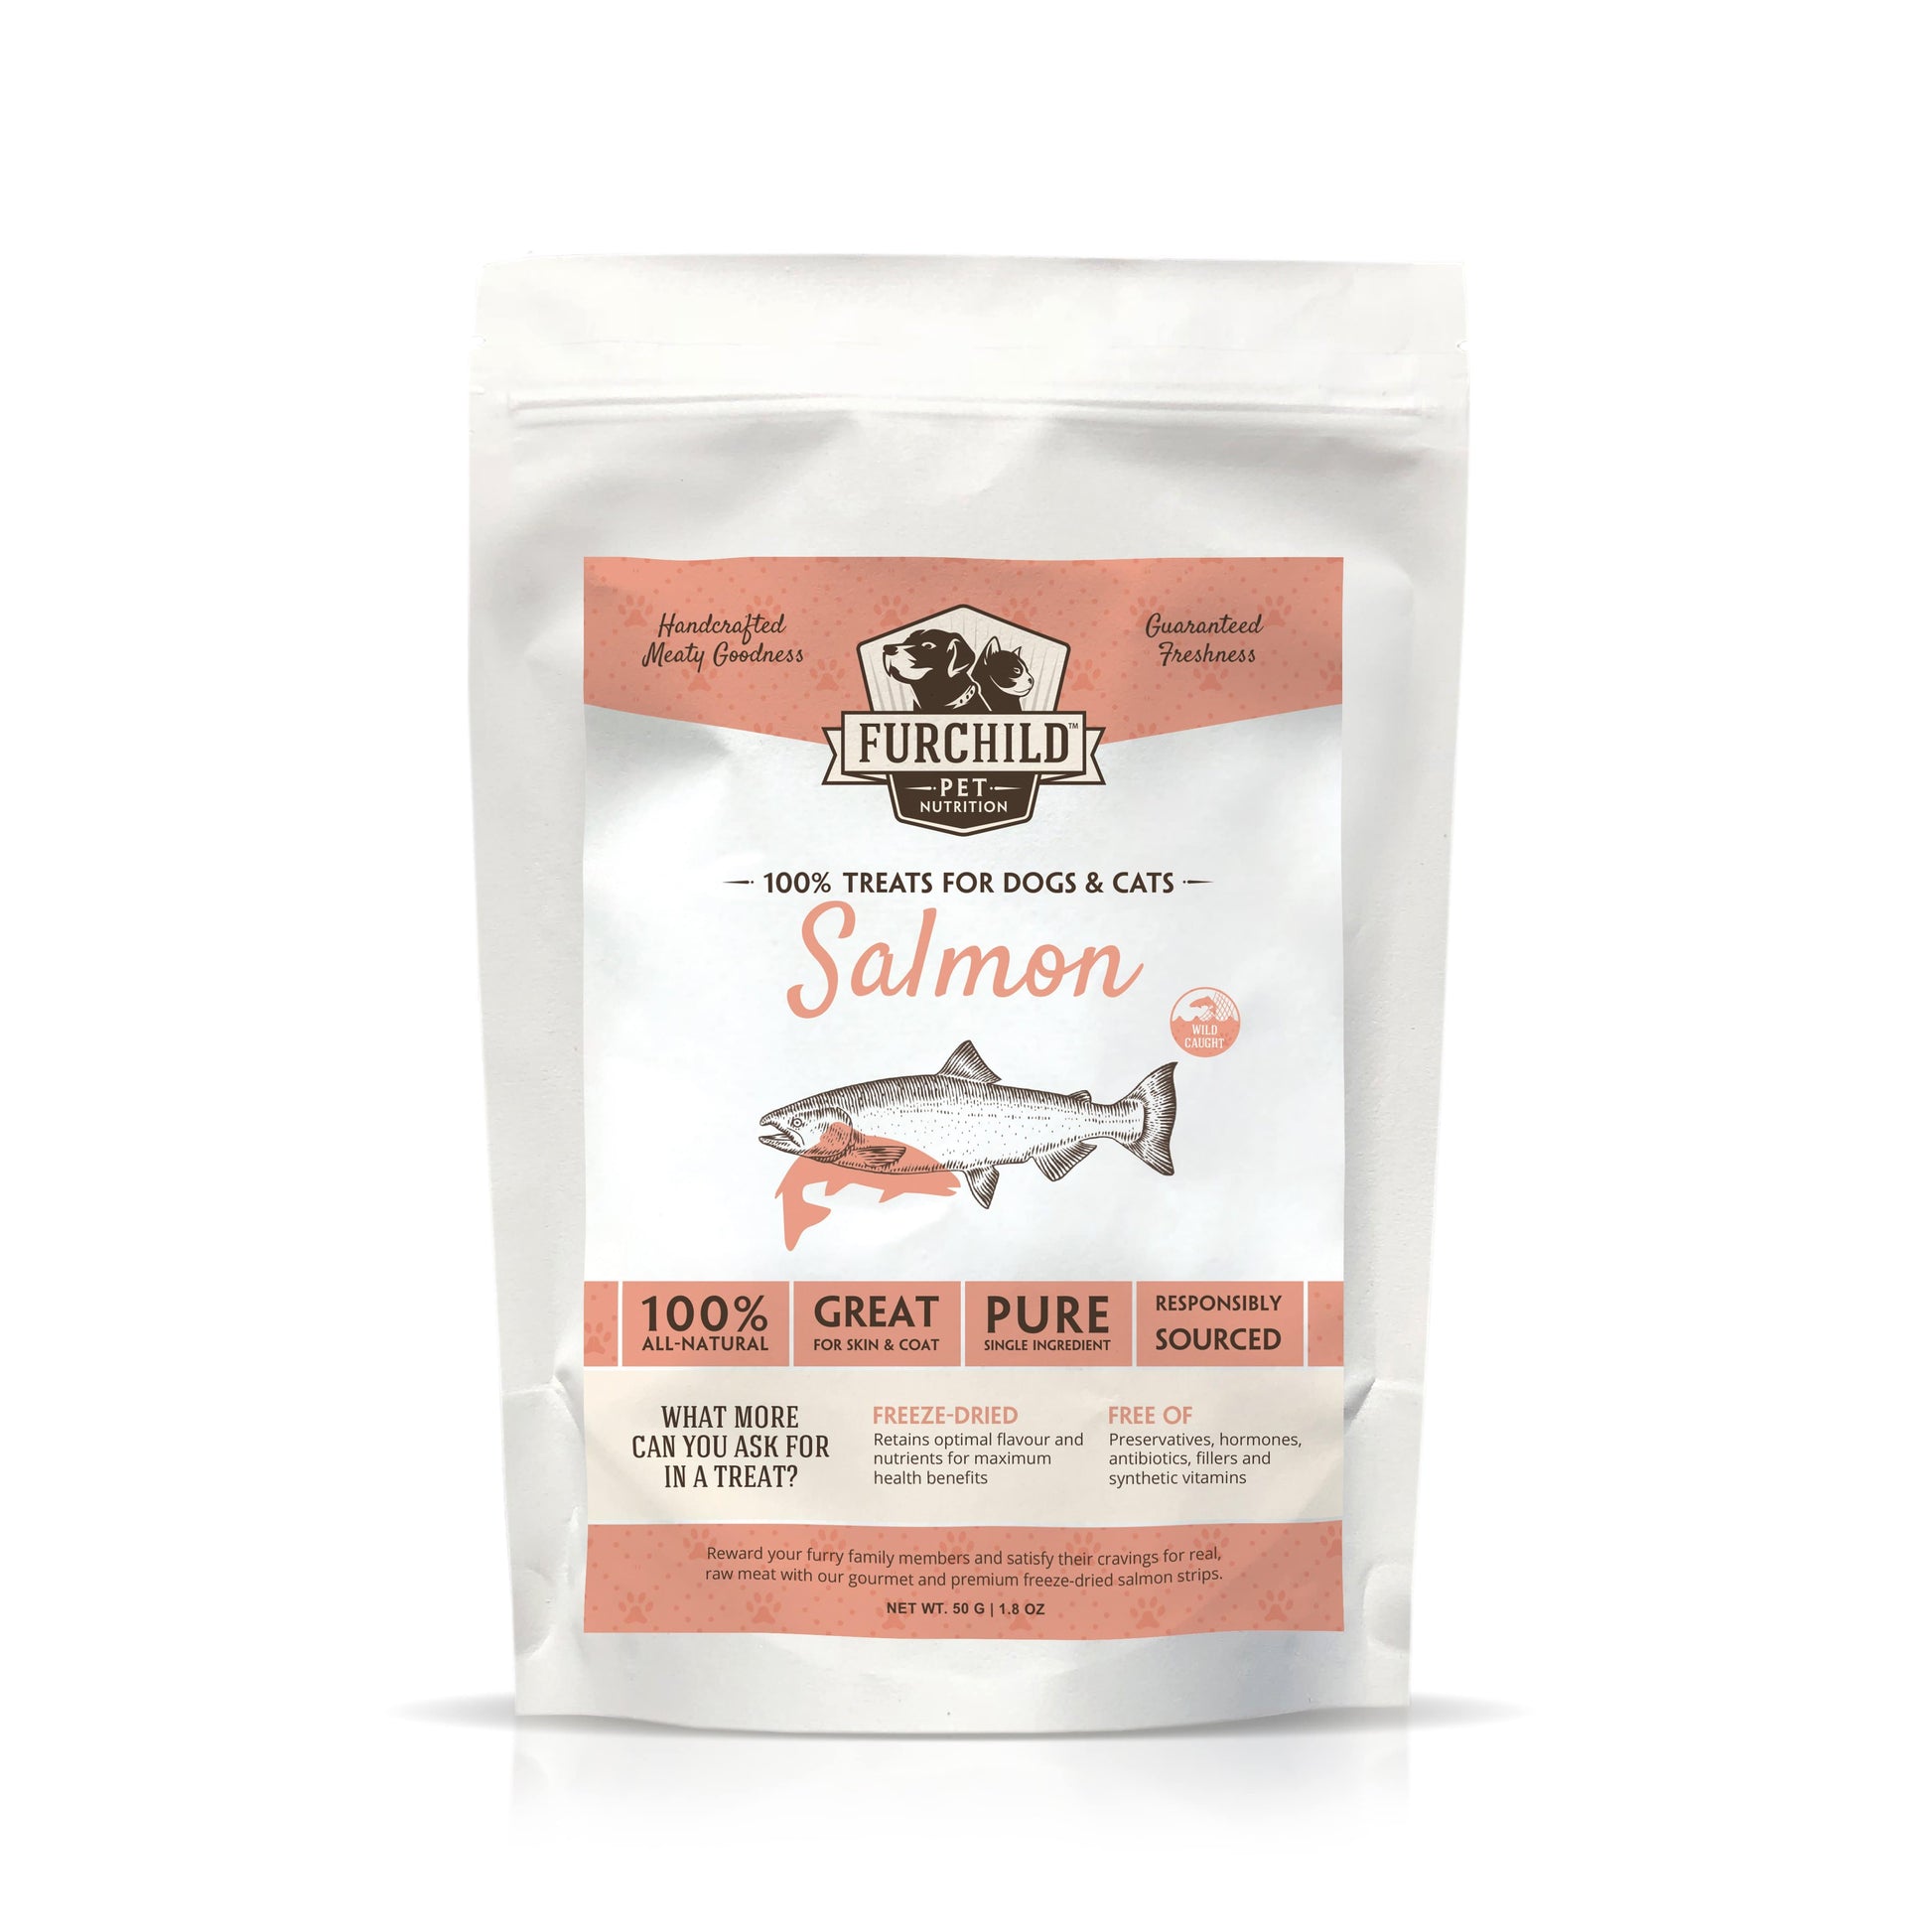 FURCHILD Premium Freeze-Dried Wild-Caught Salmon Raw Pet Treats - My Cat and Co.